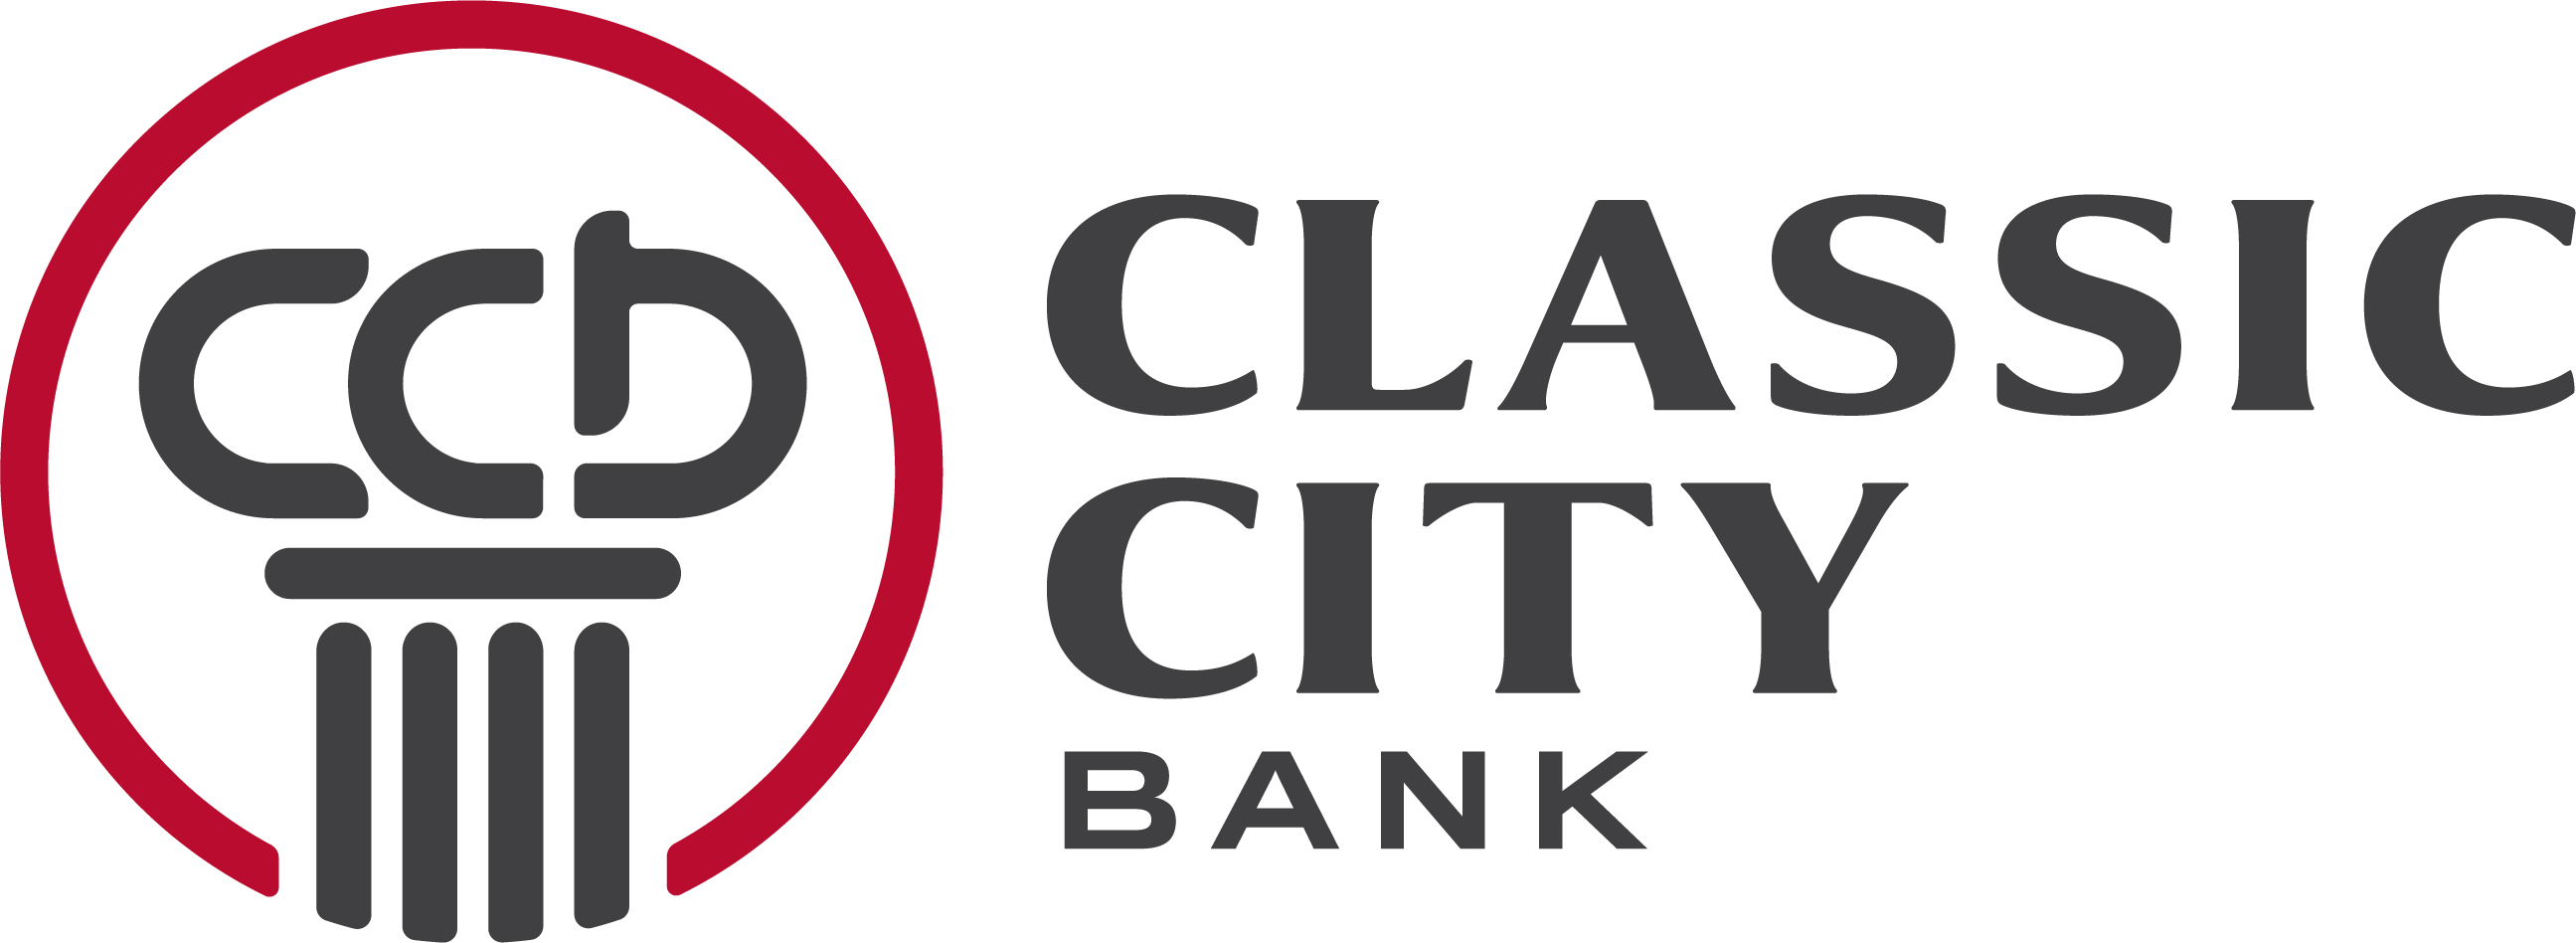 Classic City Bank Logo